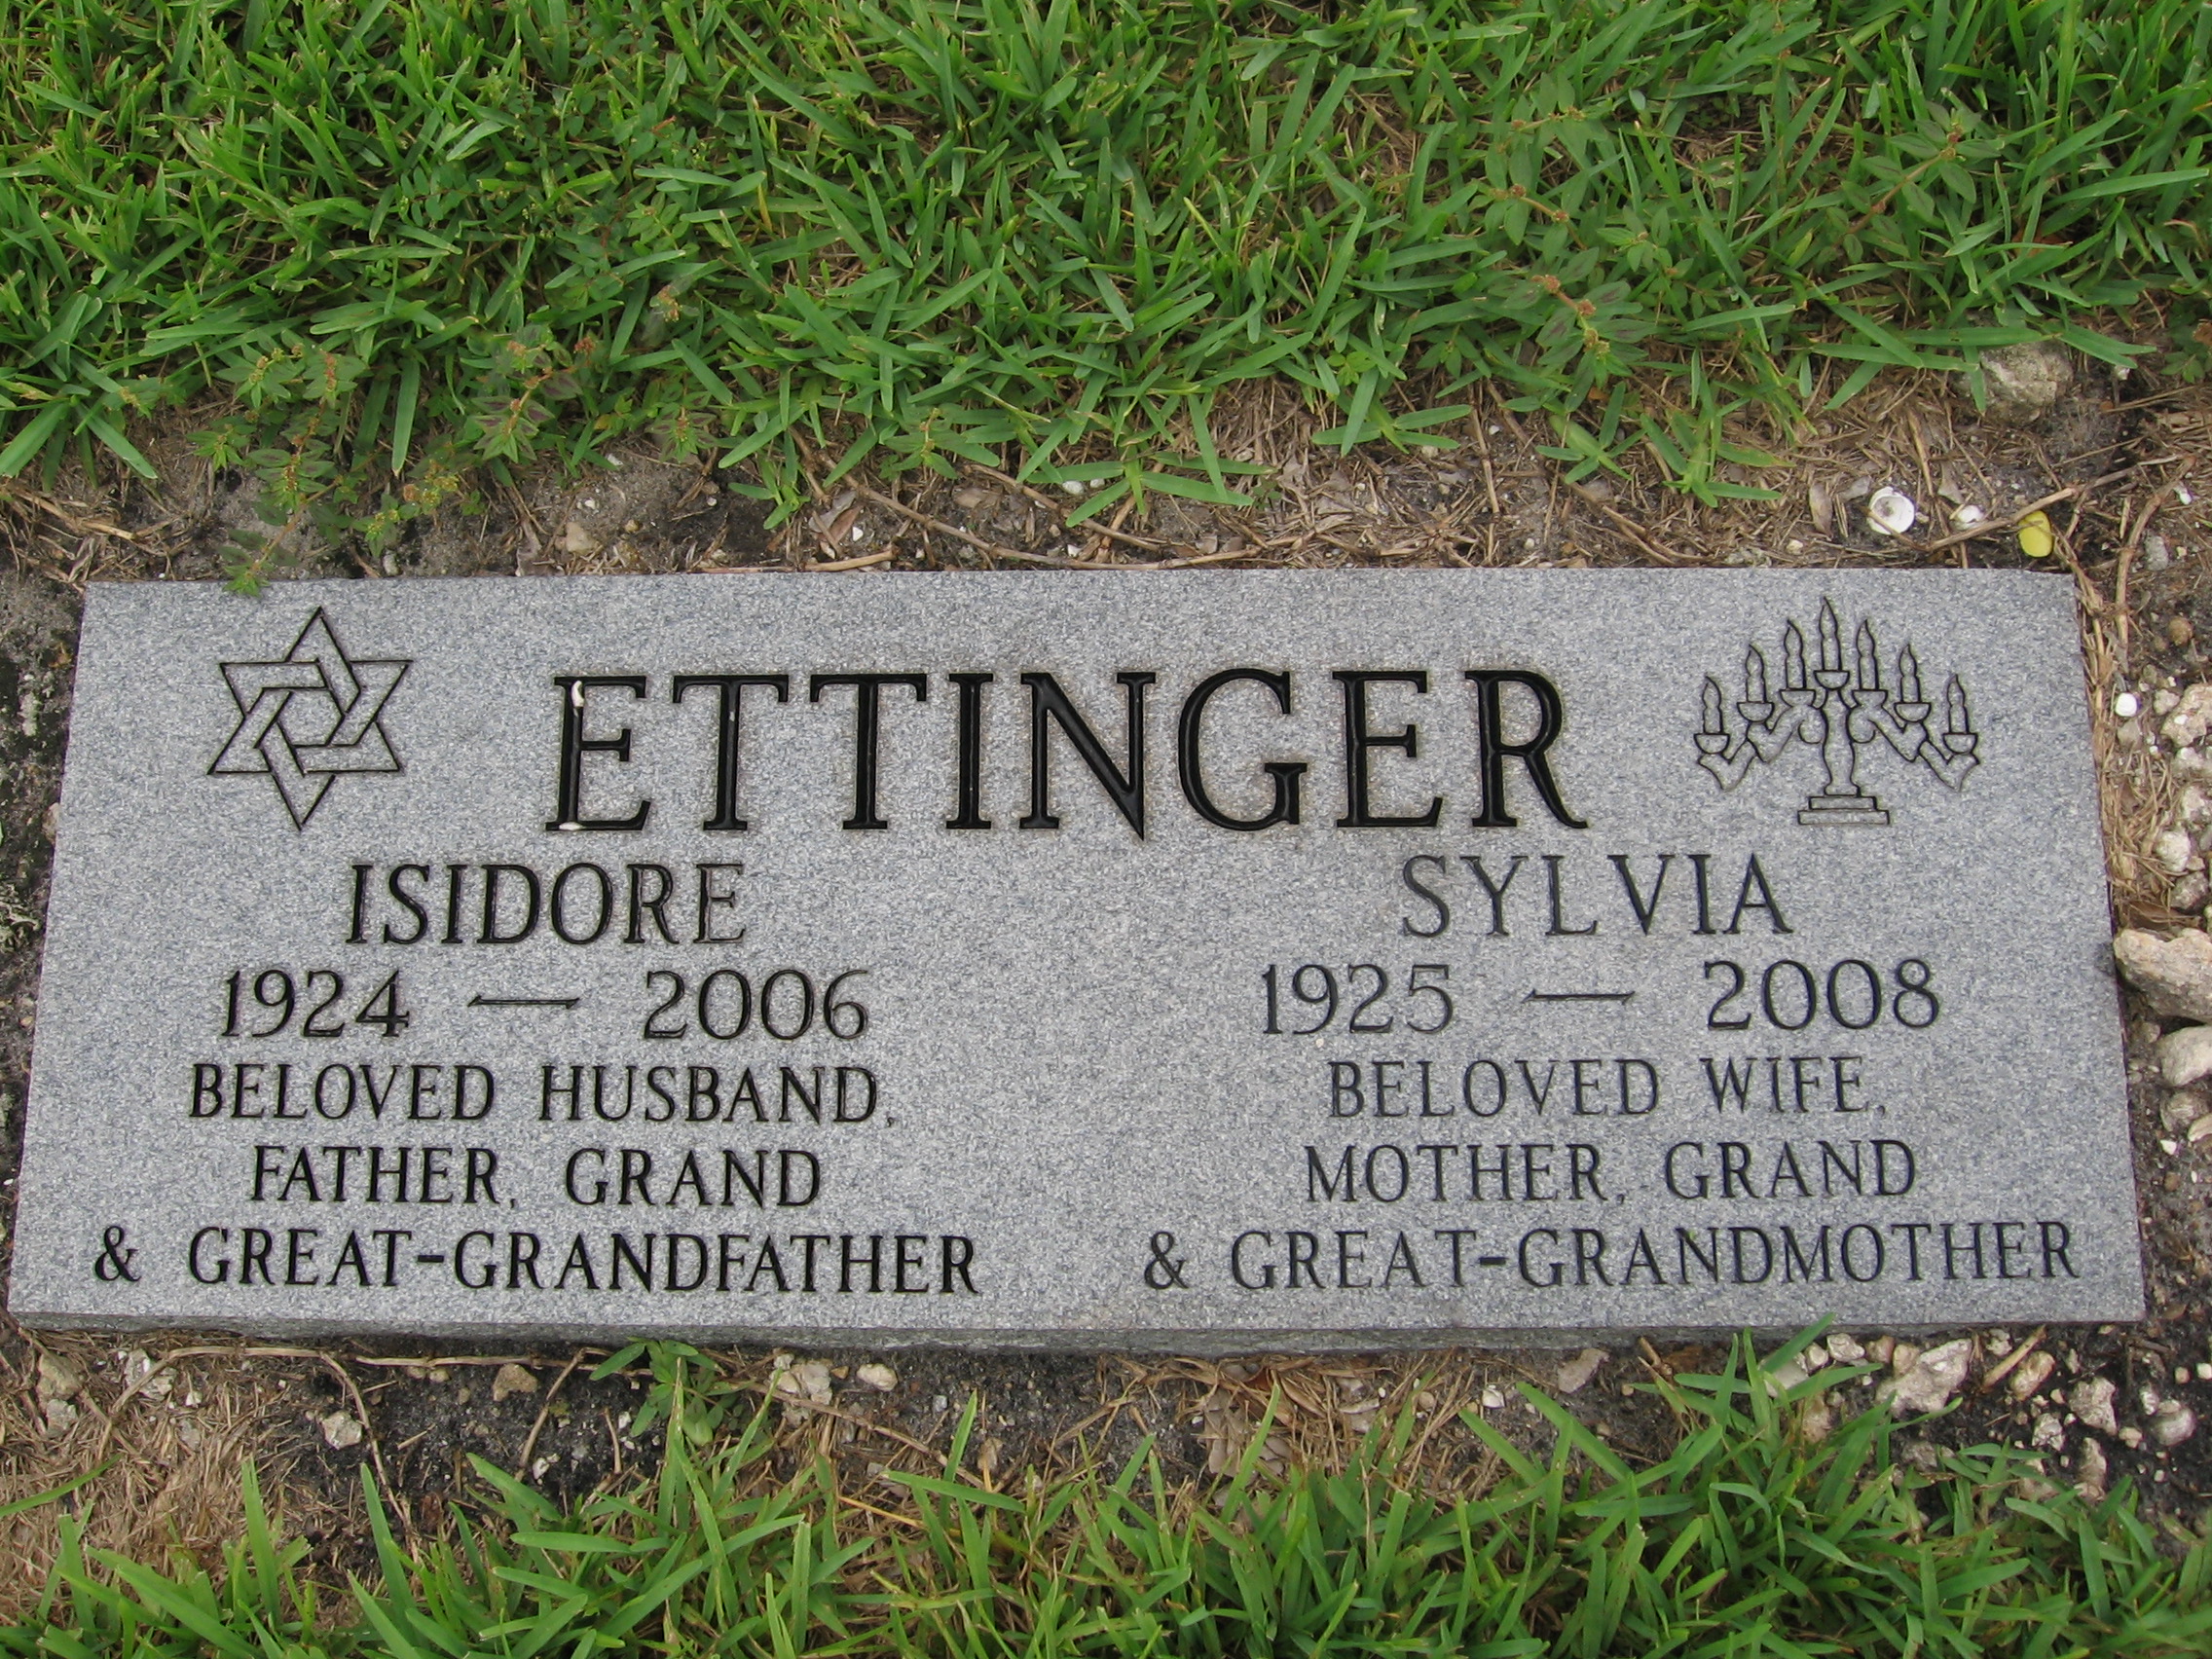 Isidore Ettinger